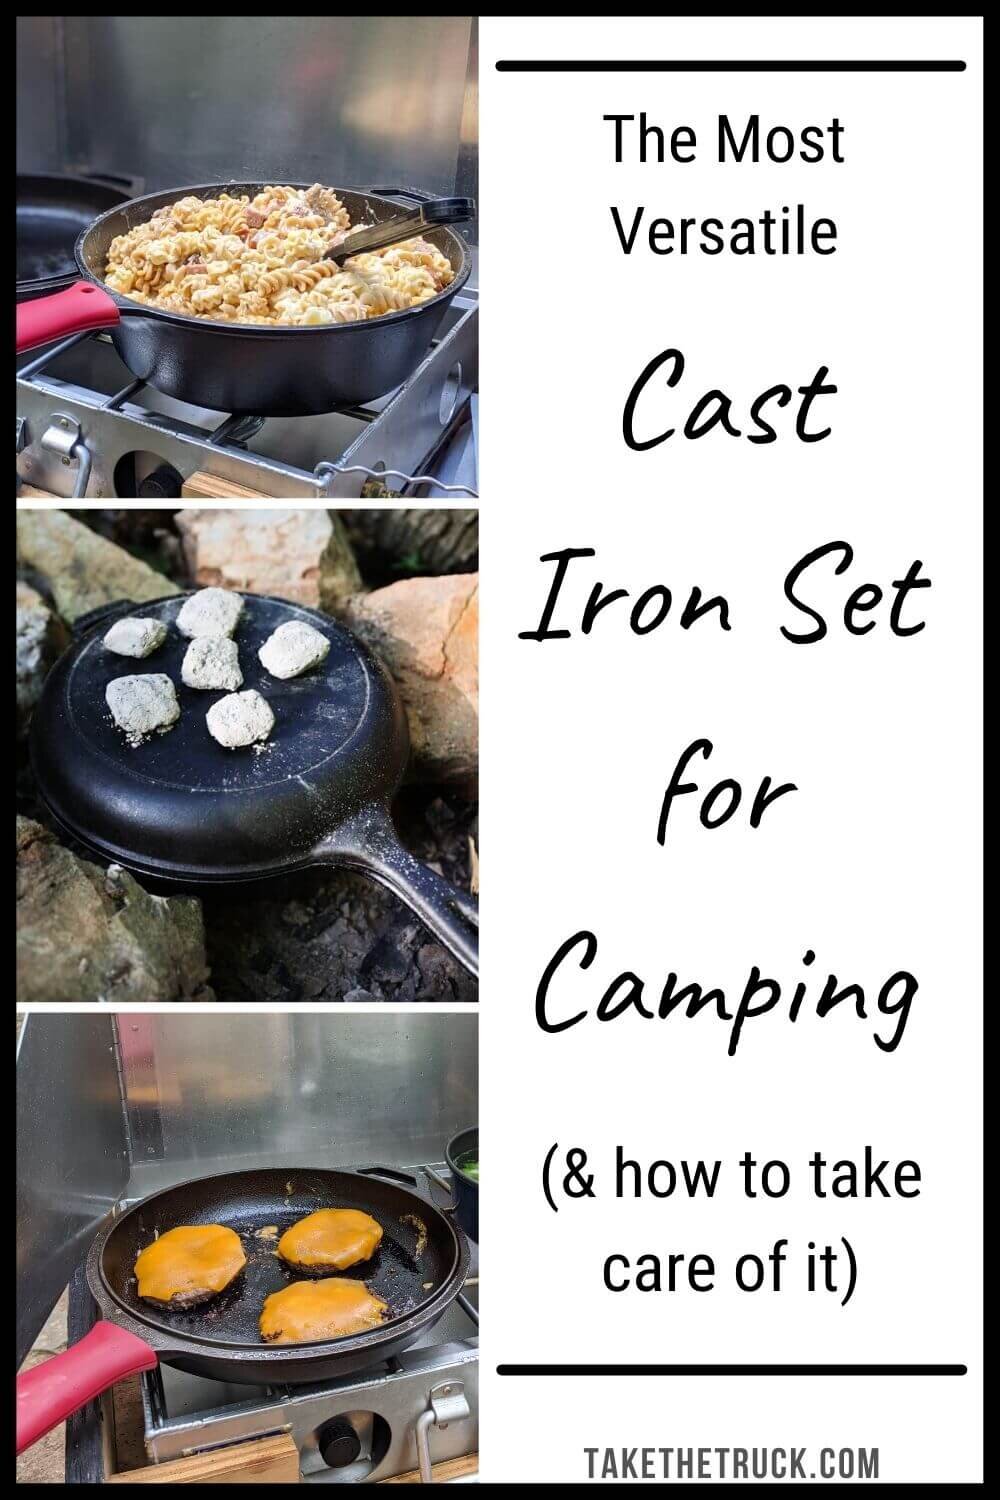 Campfire Skillet 30 cm - Sartén hierro fundido – Camping Sport